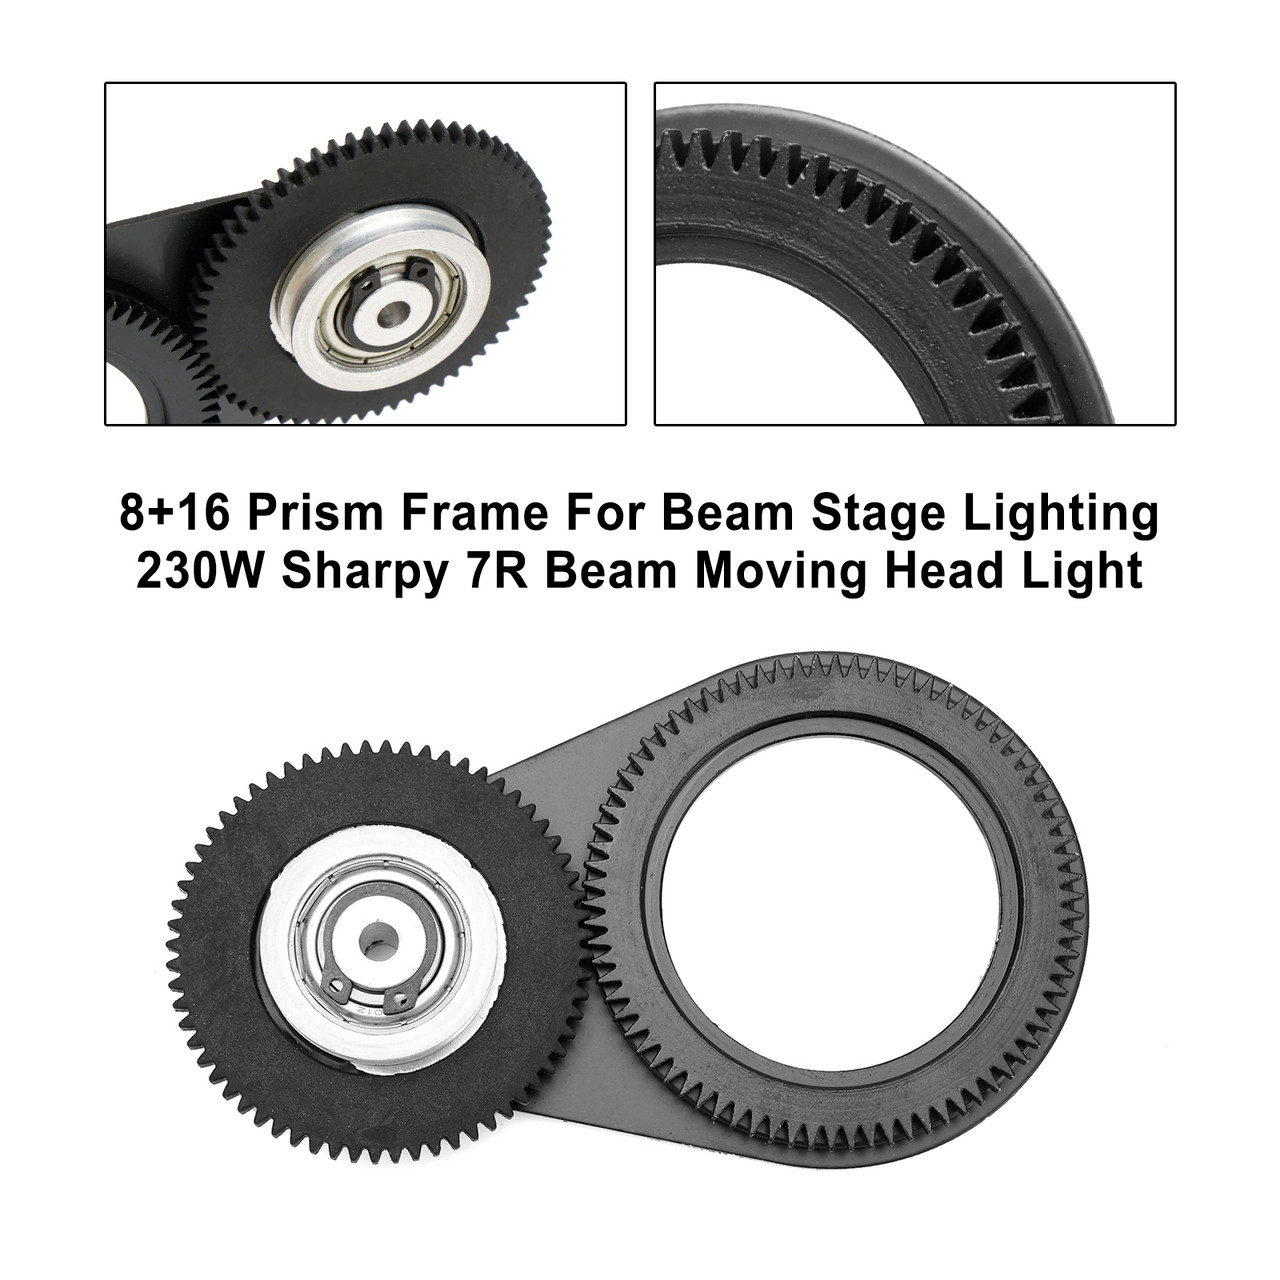 8+16 Prism Frame For Beam Stage Lighting 230W Sharpy 7R Beam Moving Head Light